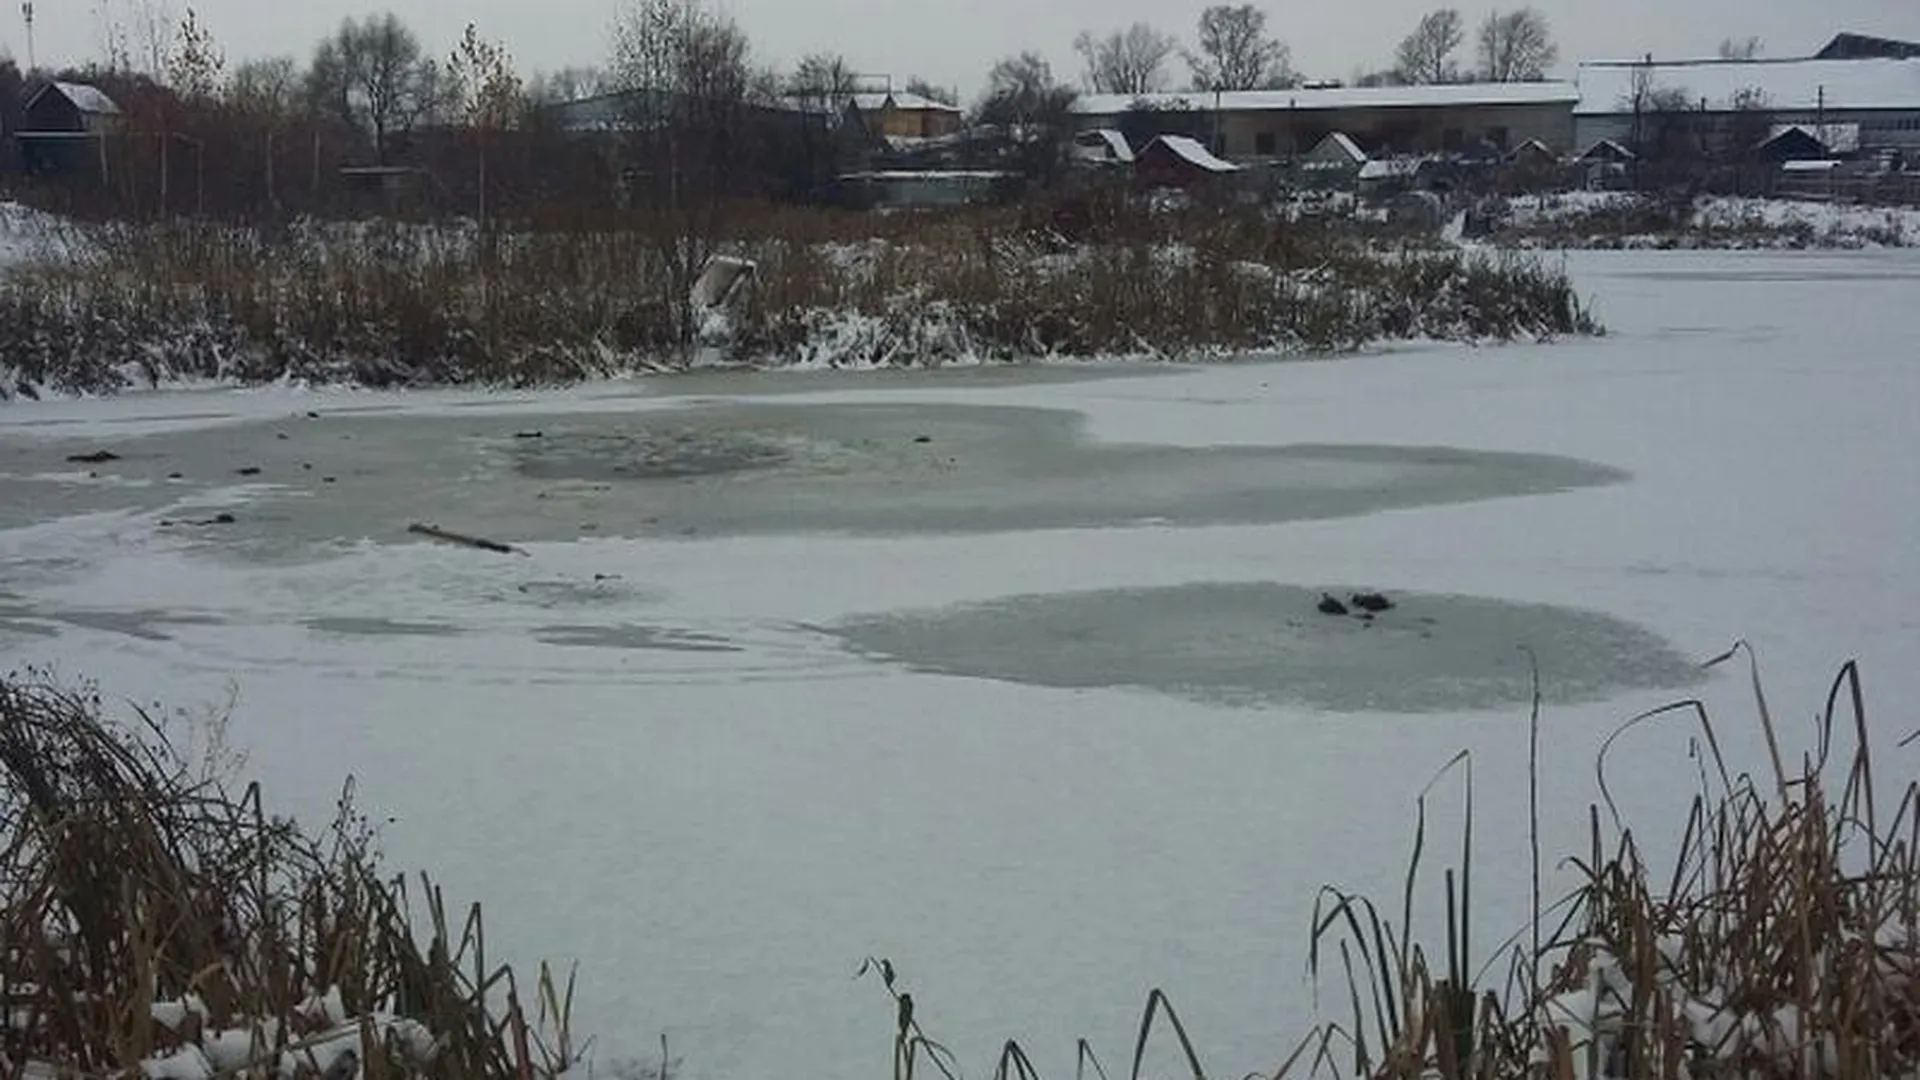 Супруги провалились под лед на рыбалке в Коломне, мужчина погиб